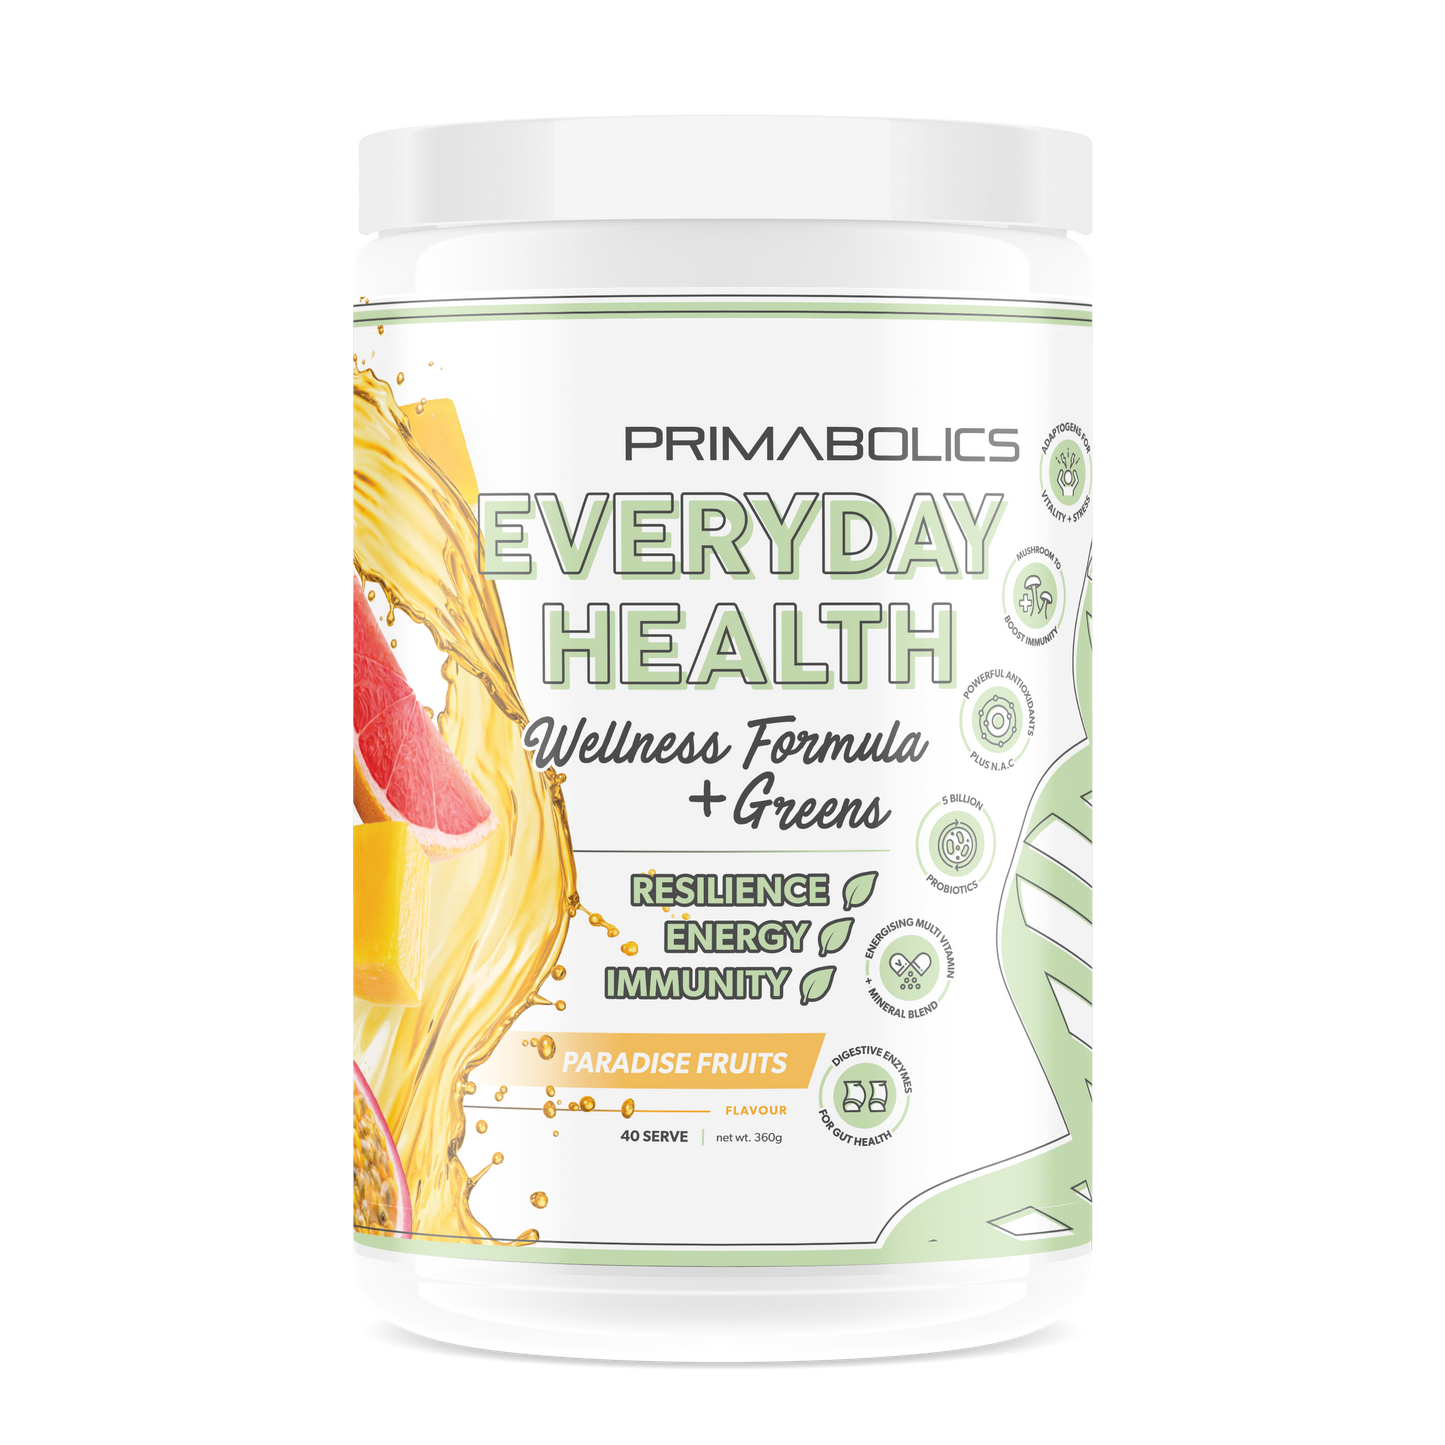 Everyday Health Wellness Formula - 40 SERVE